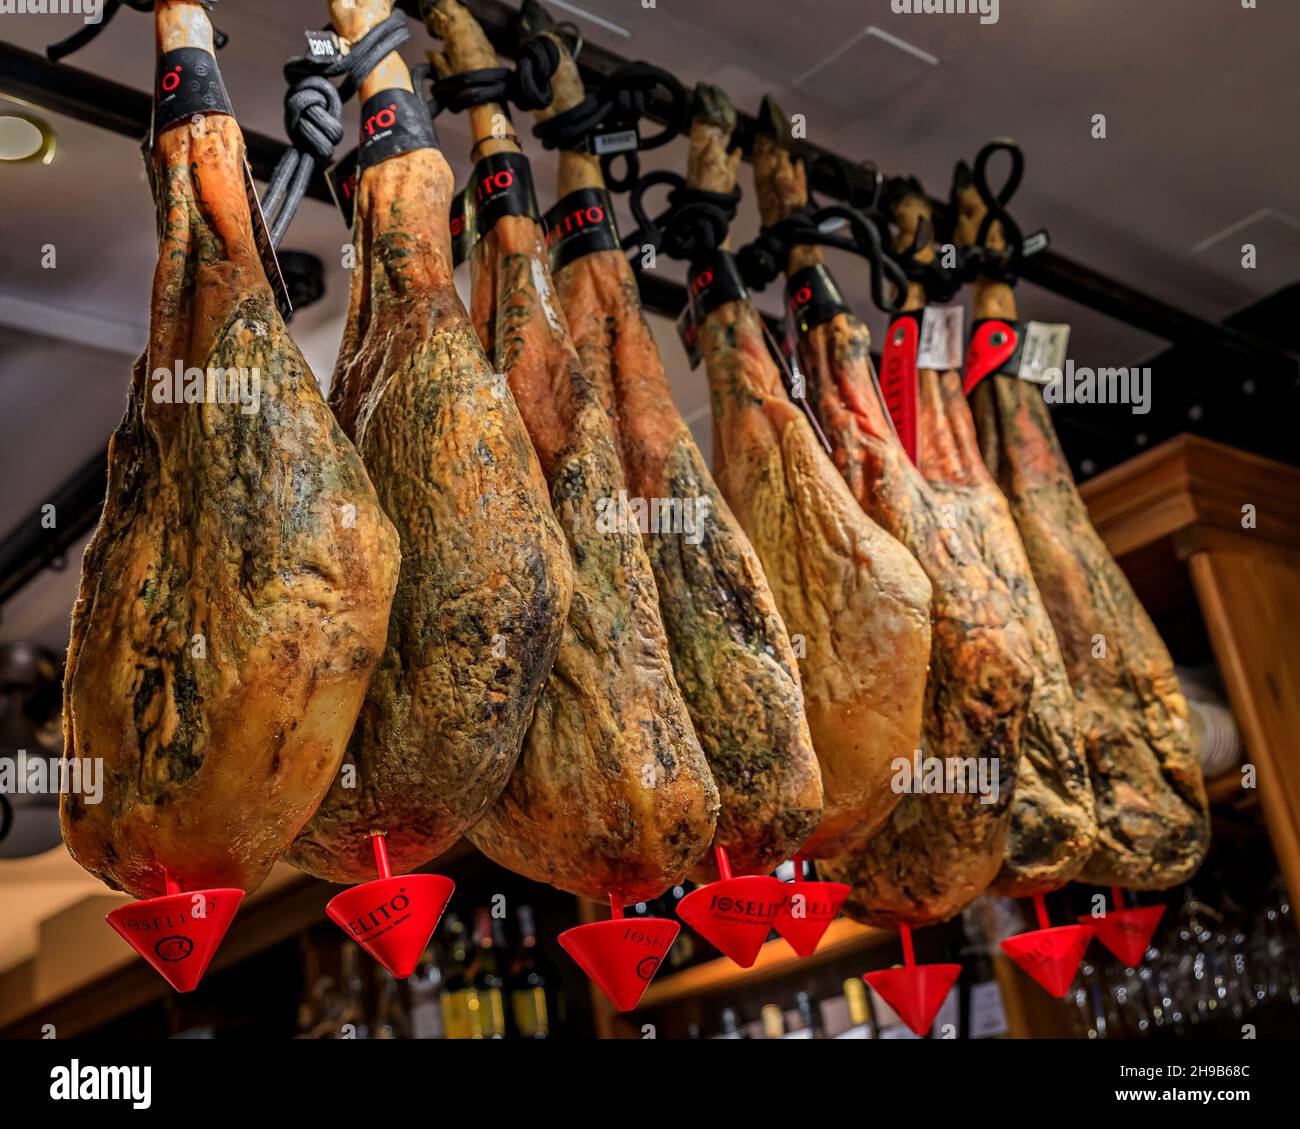 San Sebastian, Spain - June 25, 2021: Whole bone-in legs of Spanish serrano iberico ham on display at a restaurant in Donostia, Basque Country Stock Photo